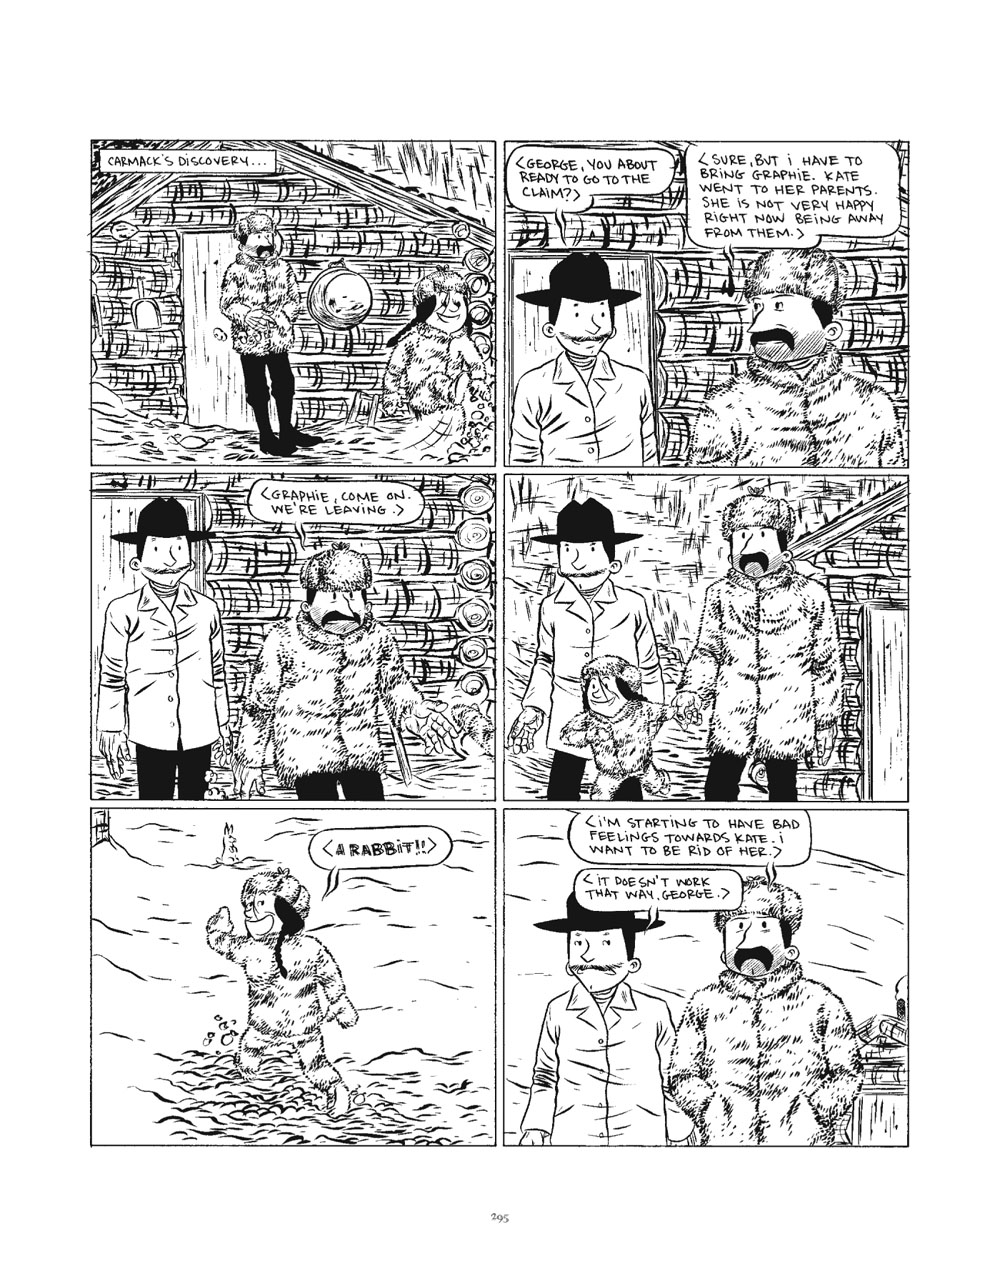 The Klondike Page 295